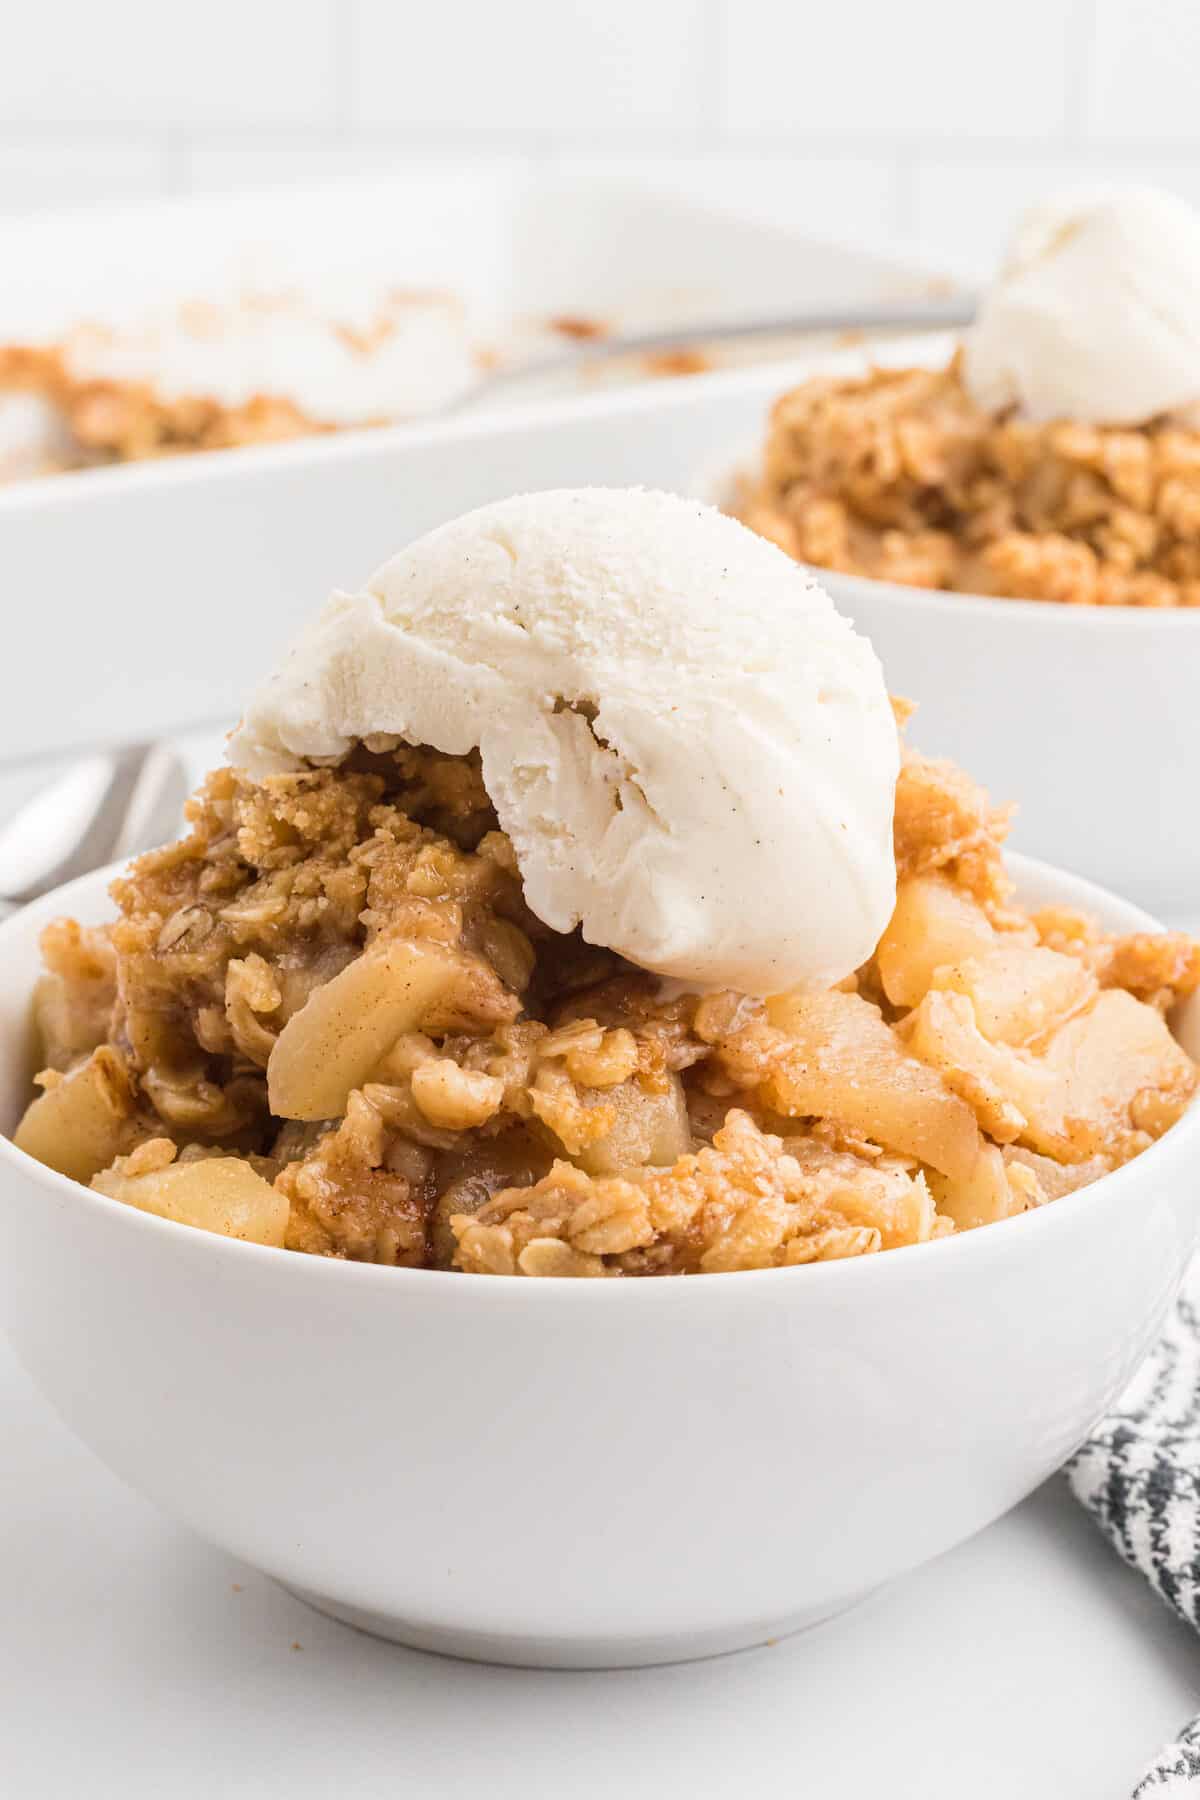 pear crisp recipe with a scoop of vanilla ice cream on top.